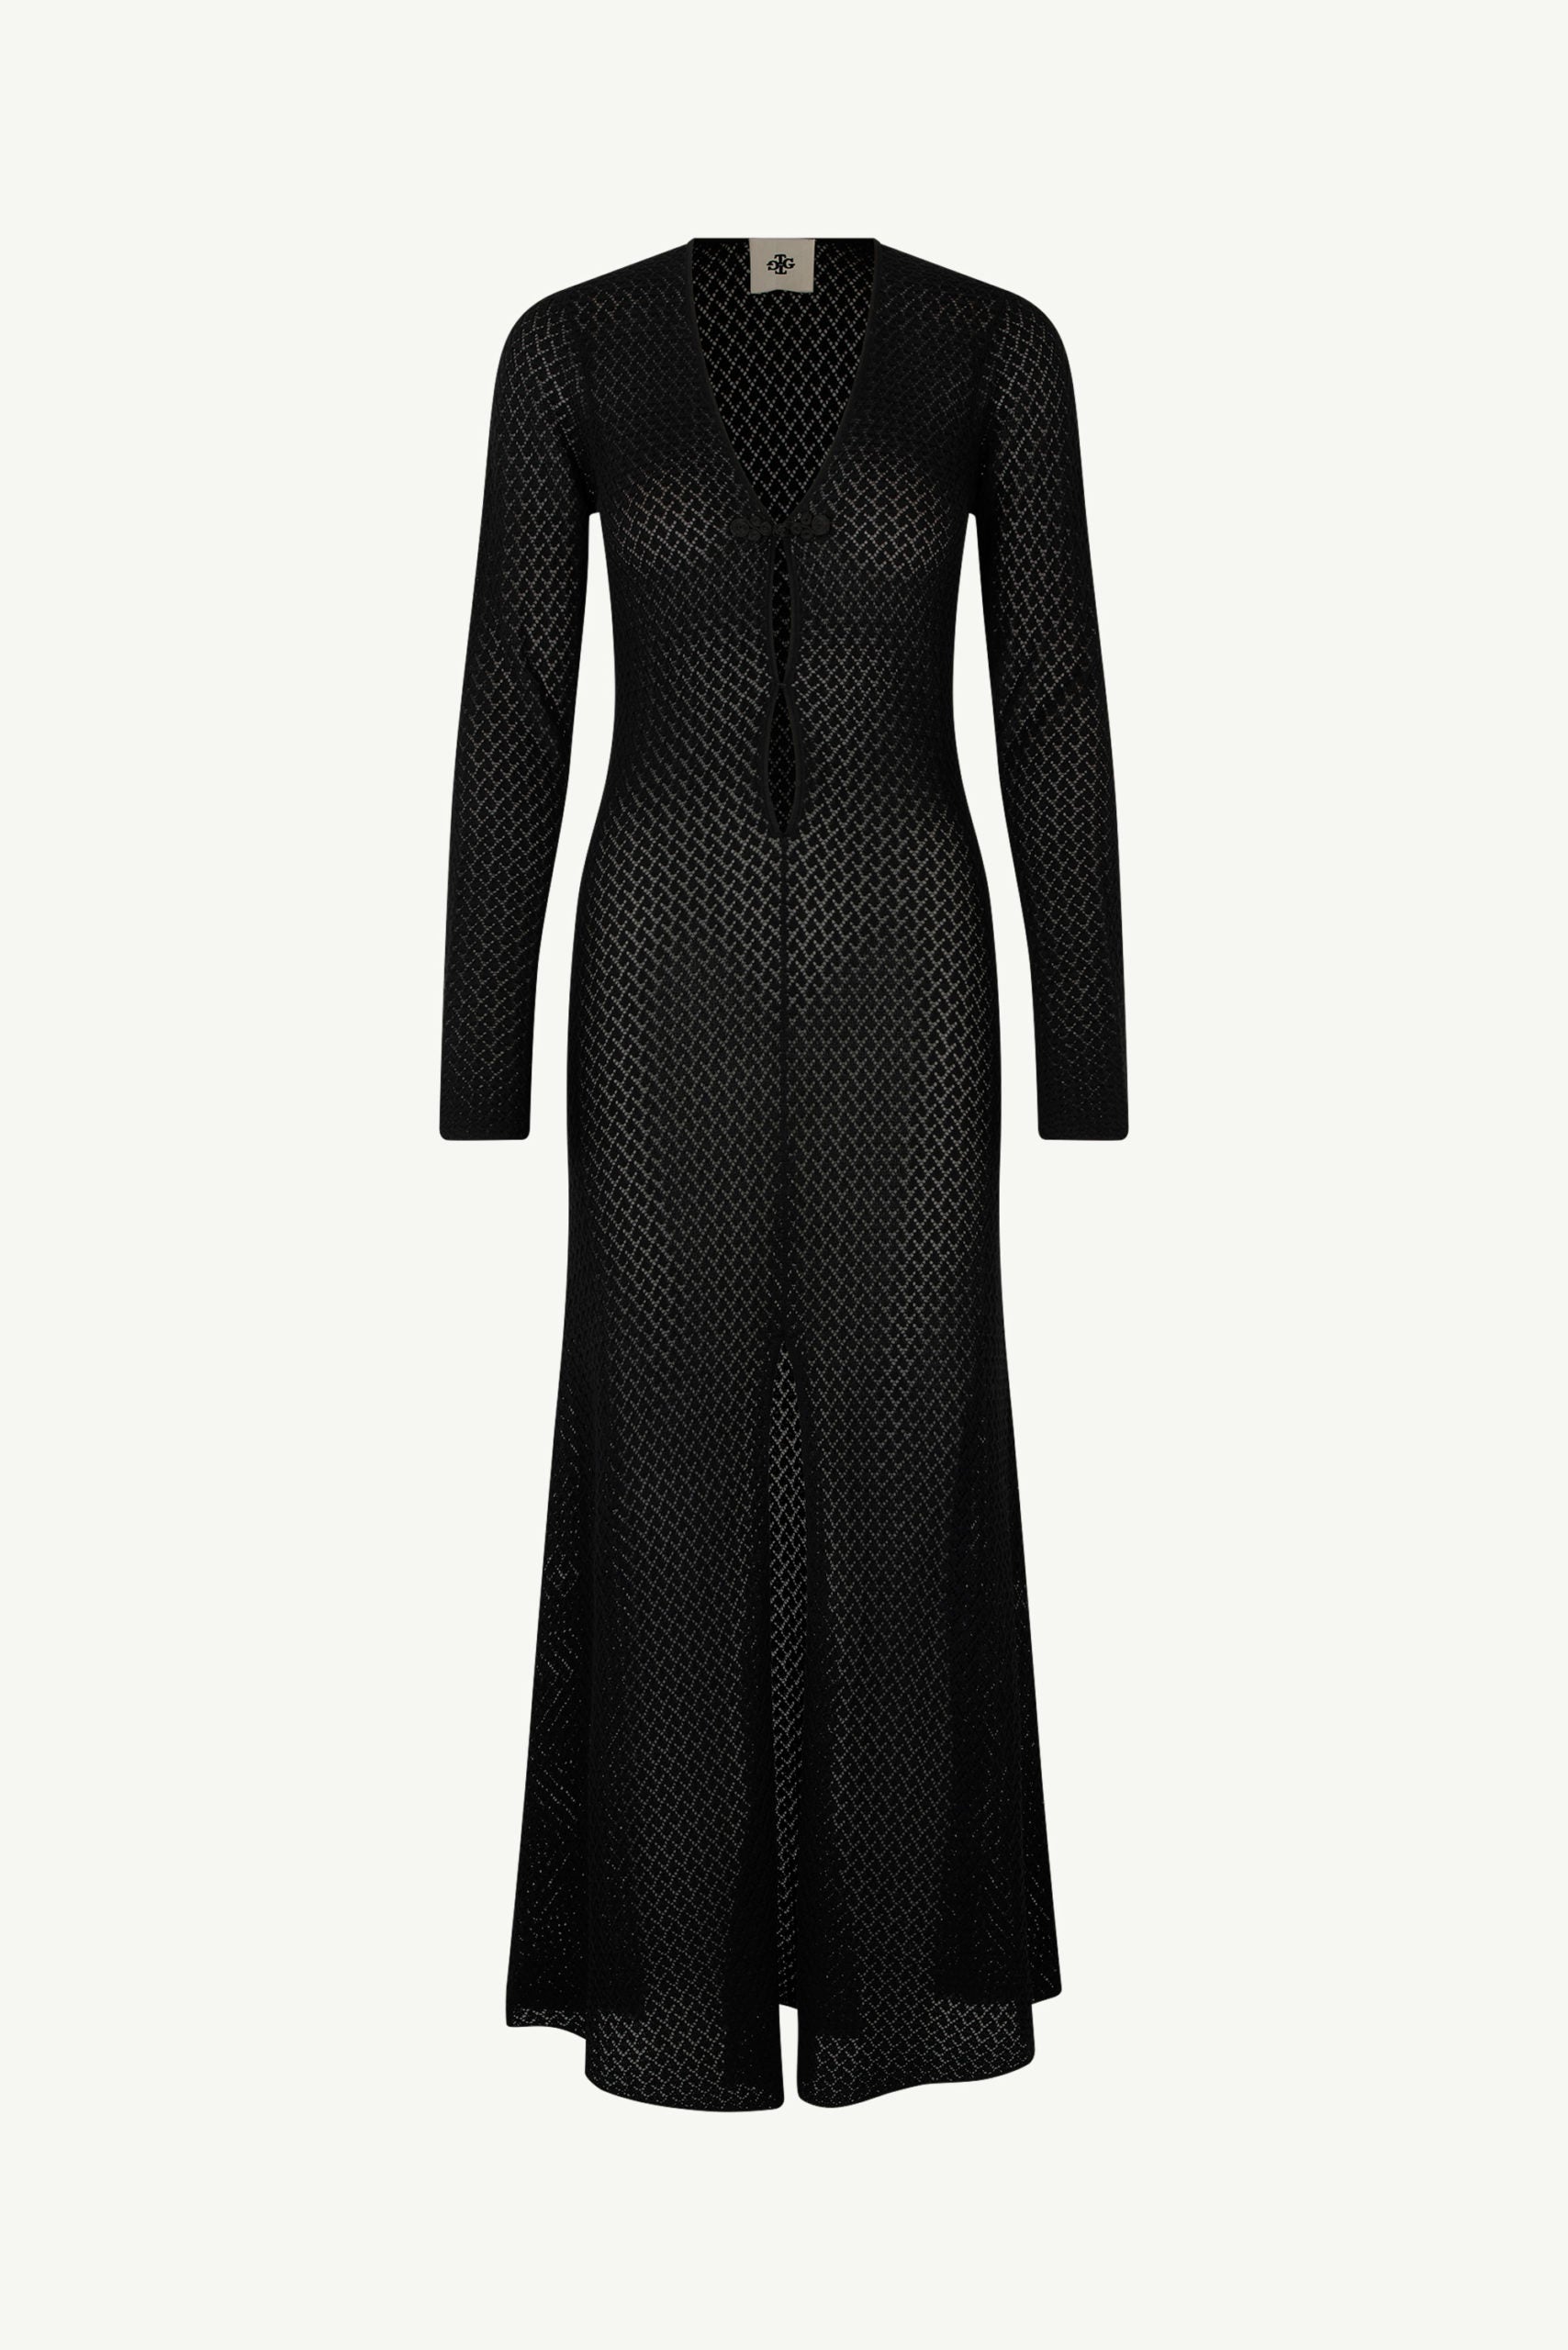 The Garment Tanzania Dress in Black